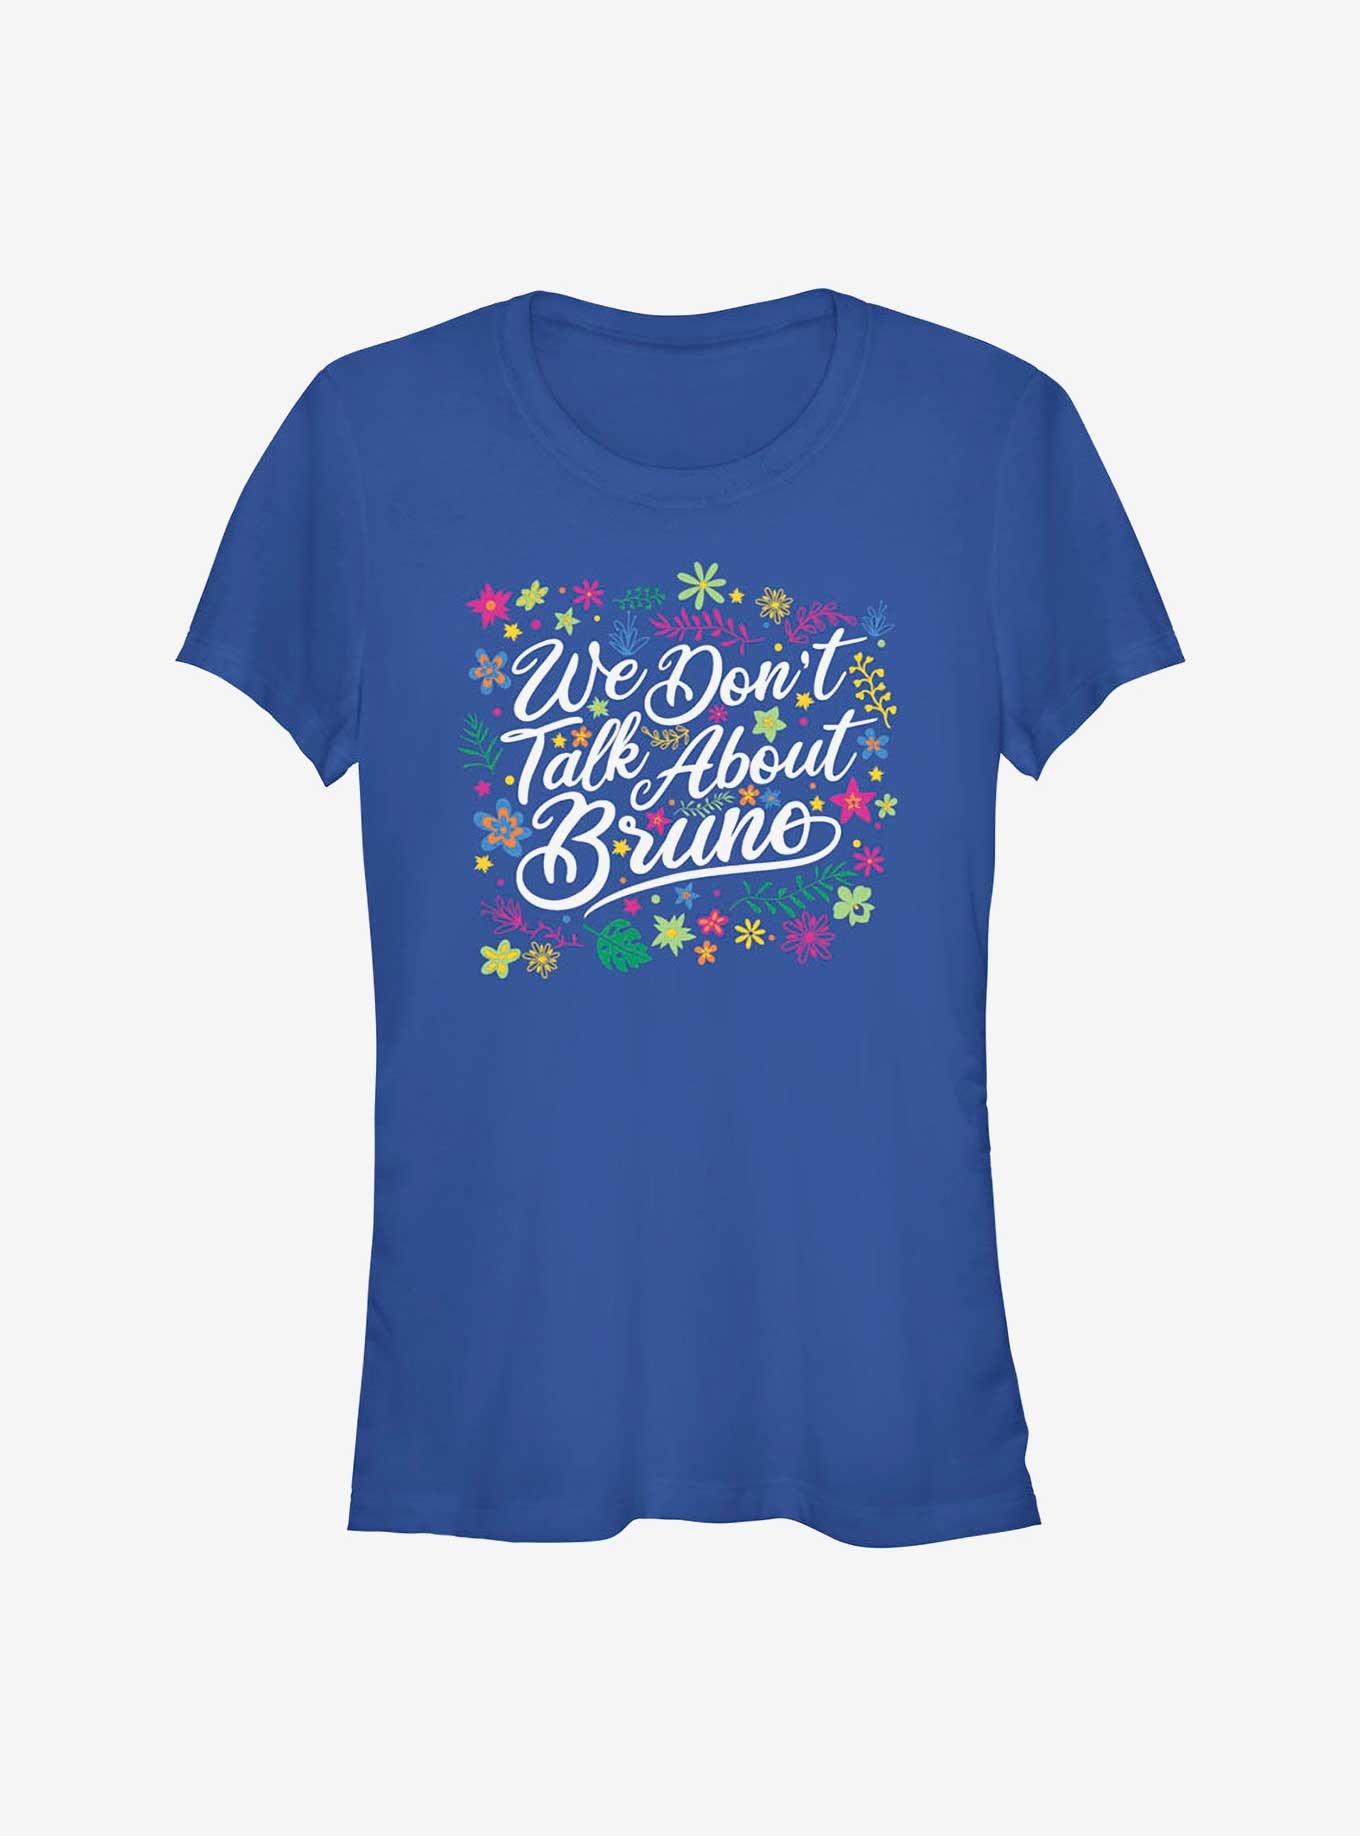 Disney's Encanto About Bruno Colorful Girl's T-Shirt, ROYAL, hi-res